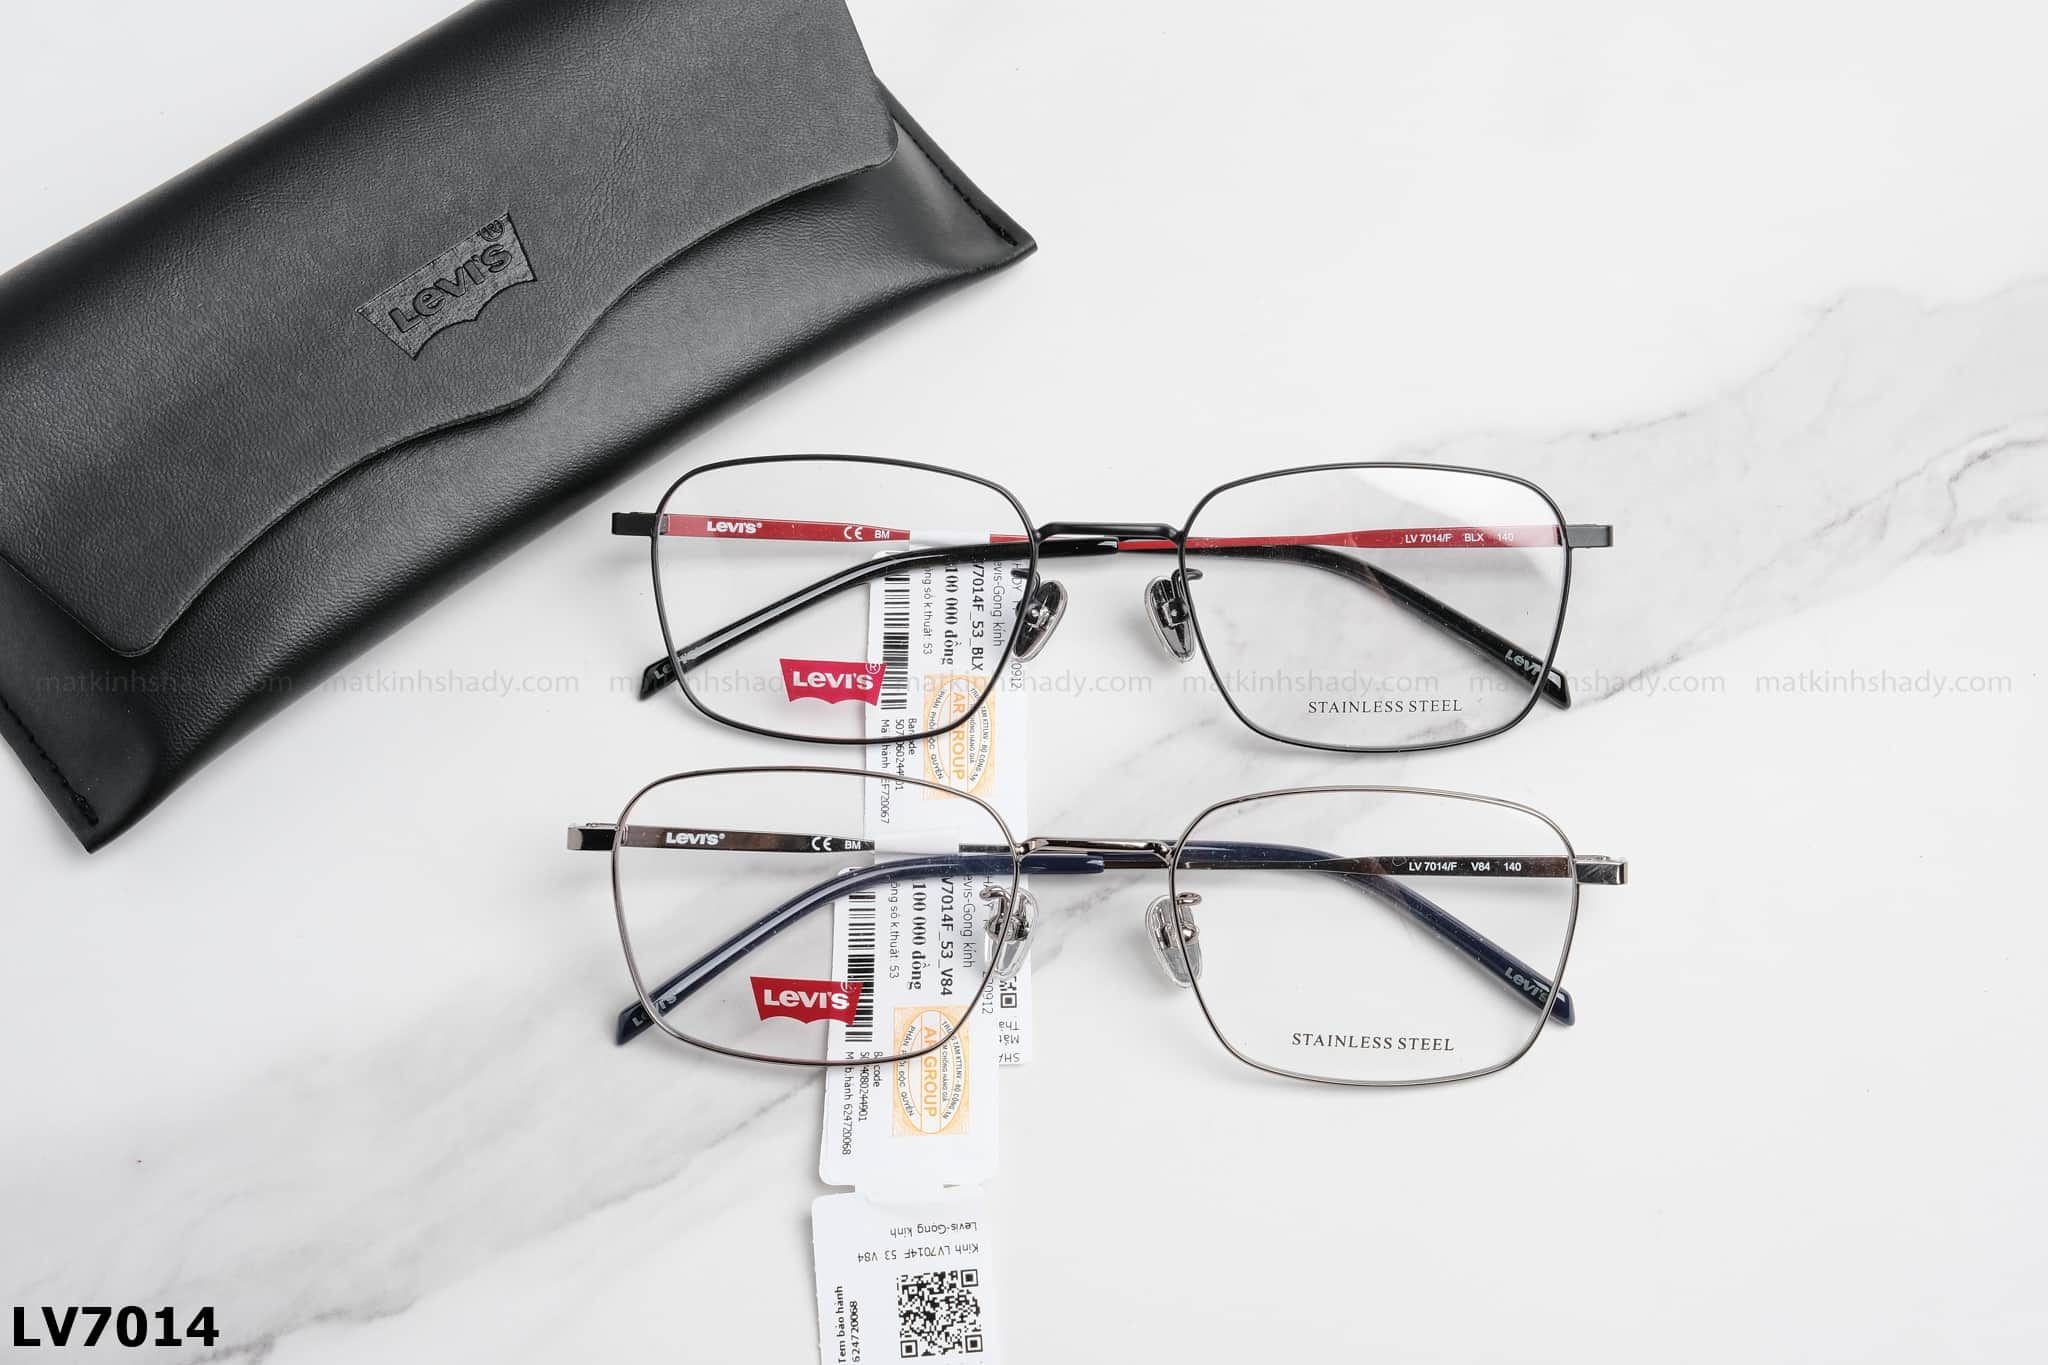  Levi's Eyewear - Glasses -  LV7014 